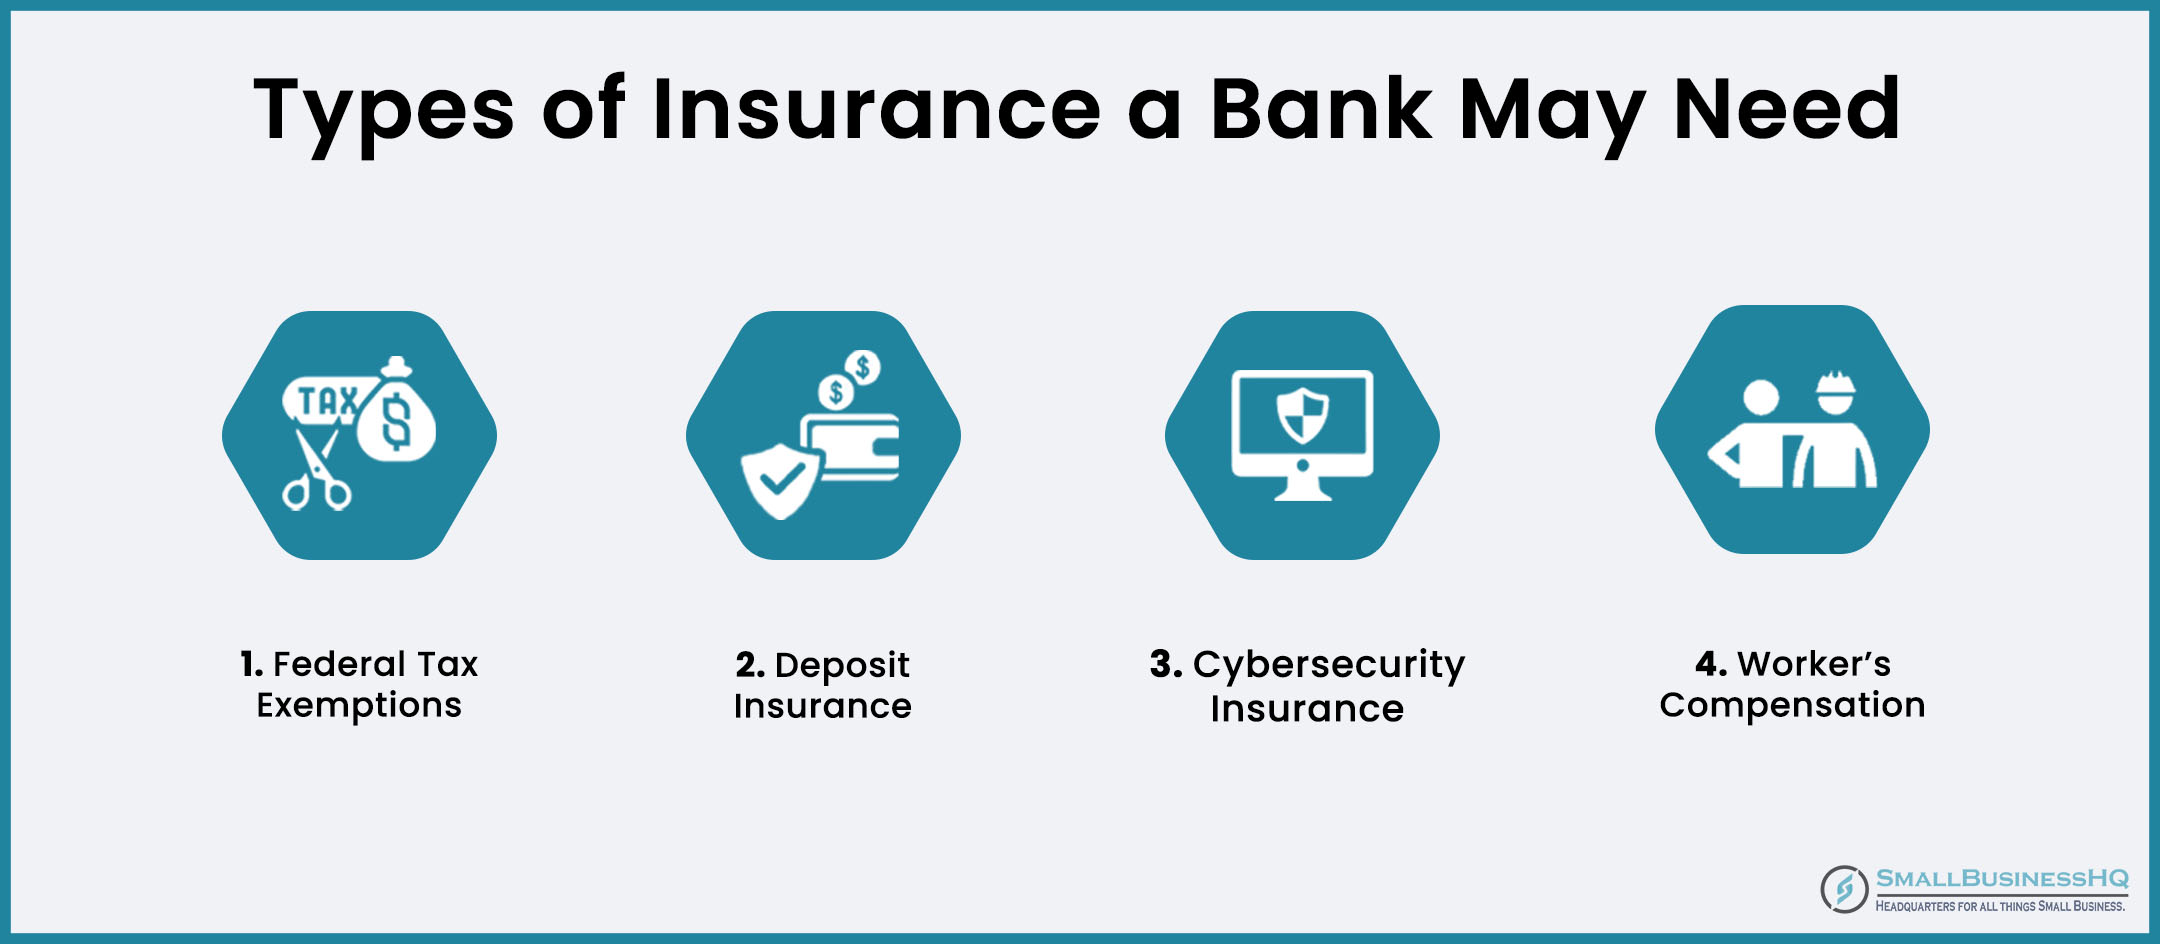 Types of Insurance a Bank May Need